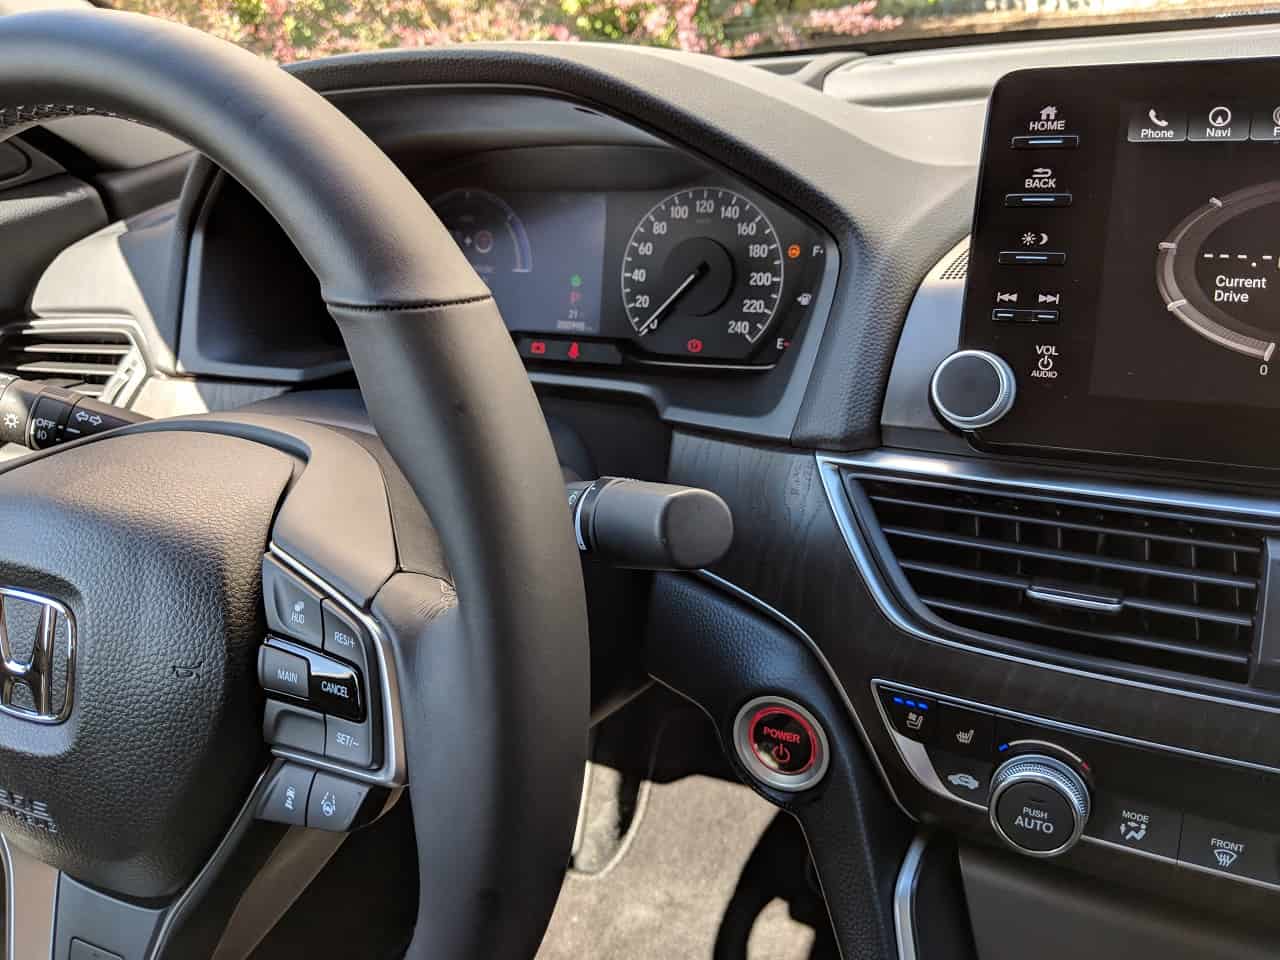 2018 Honda Accord Hybrid Review 9